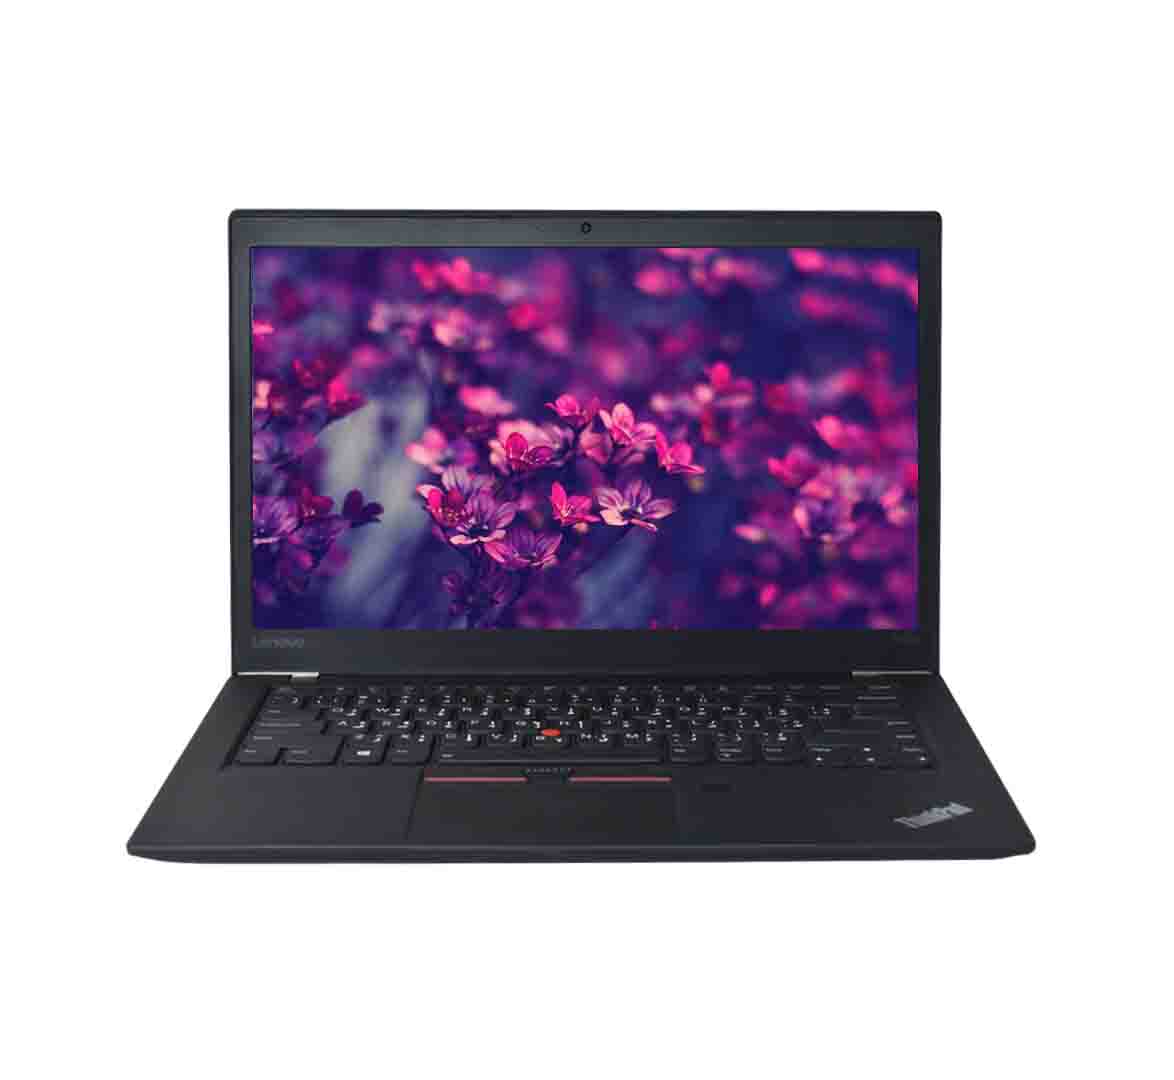 Lenovo ThinkPad T480s Business Laptop, Intel Core i7-8th Generation CPU, 16GB RAM, 512GB SSD, 14 inch Display, Windows 10 Pro